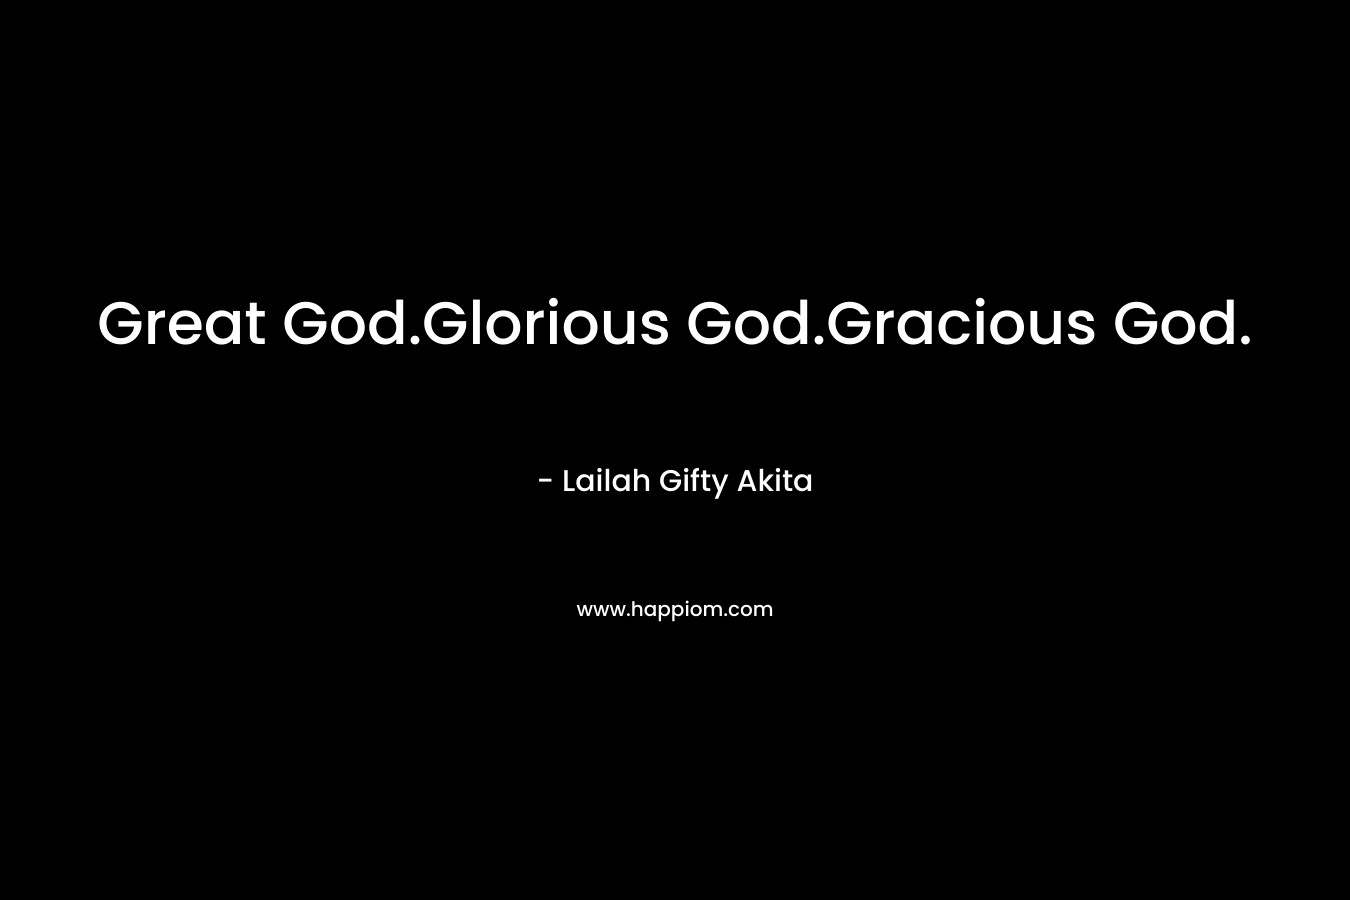 Great God.Glorious God.Gracious God.